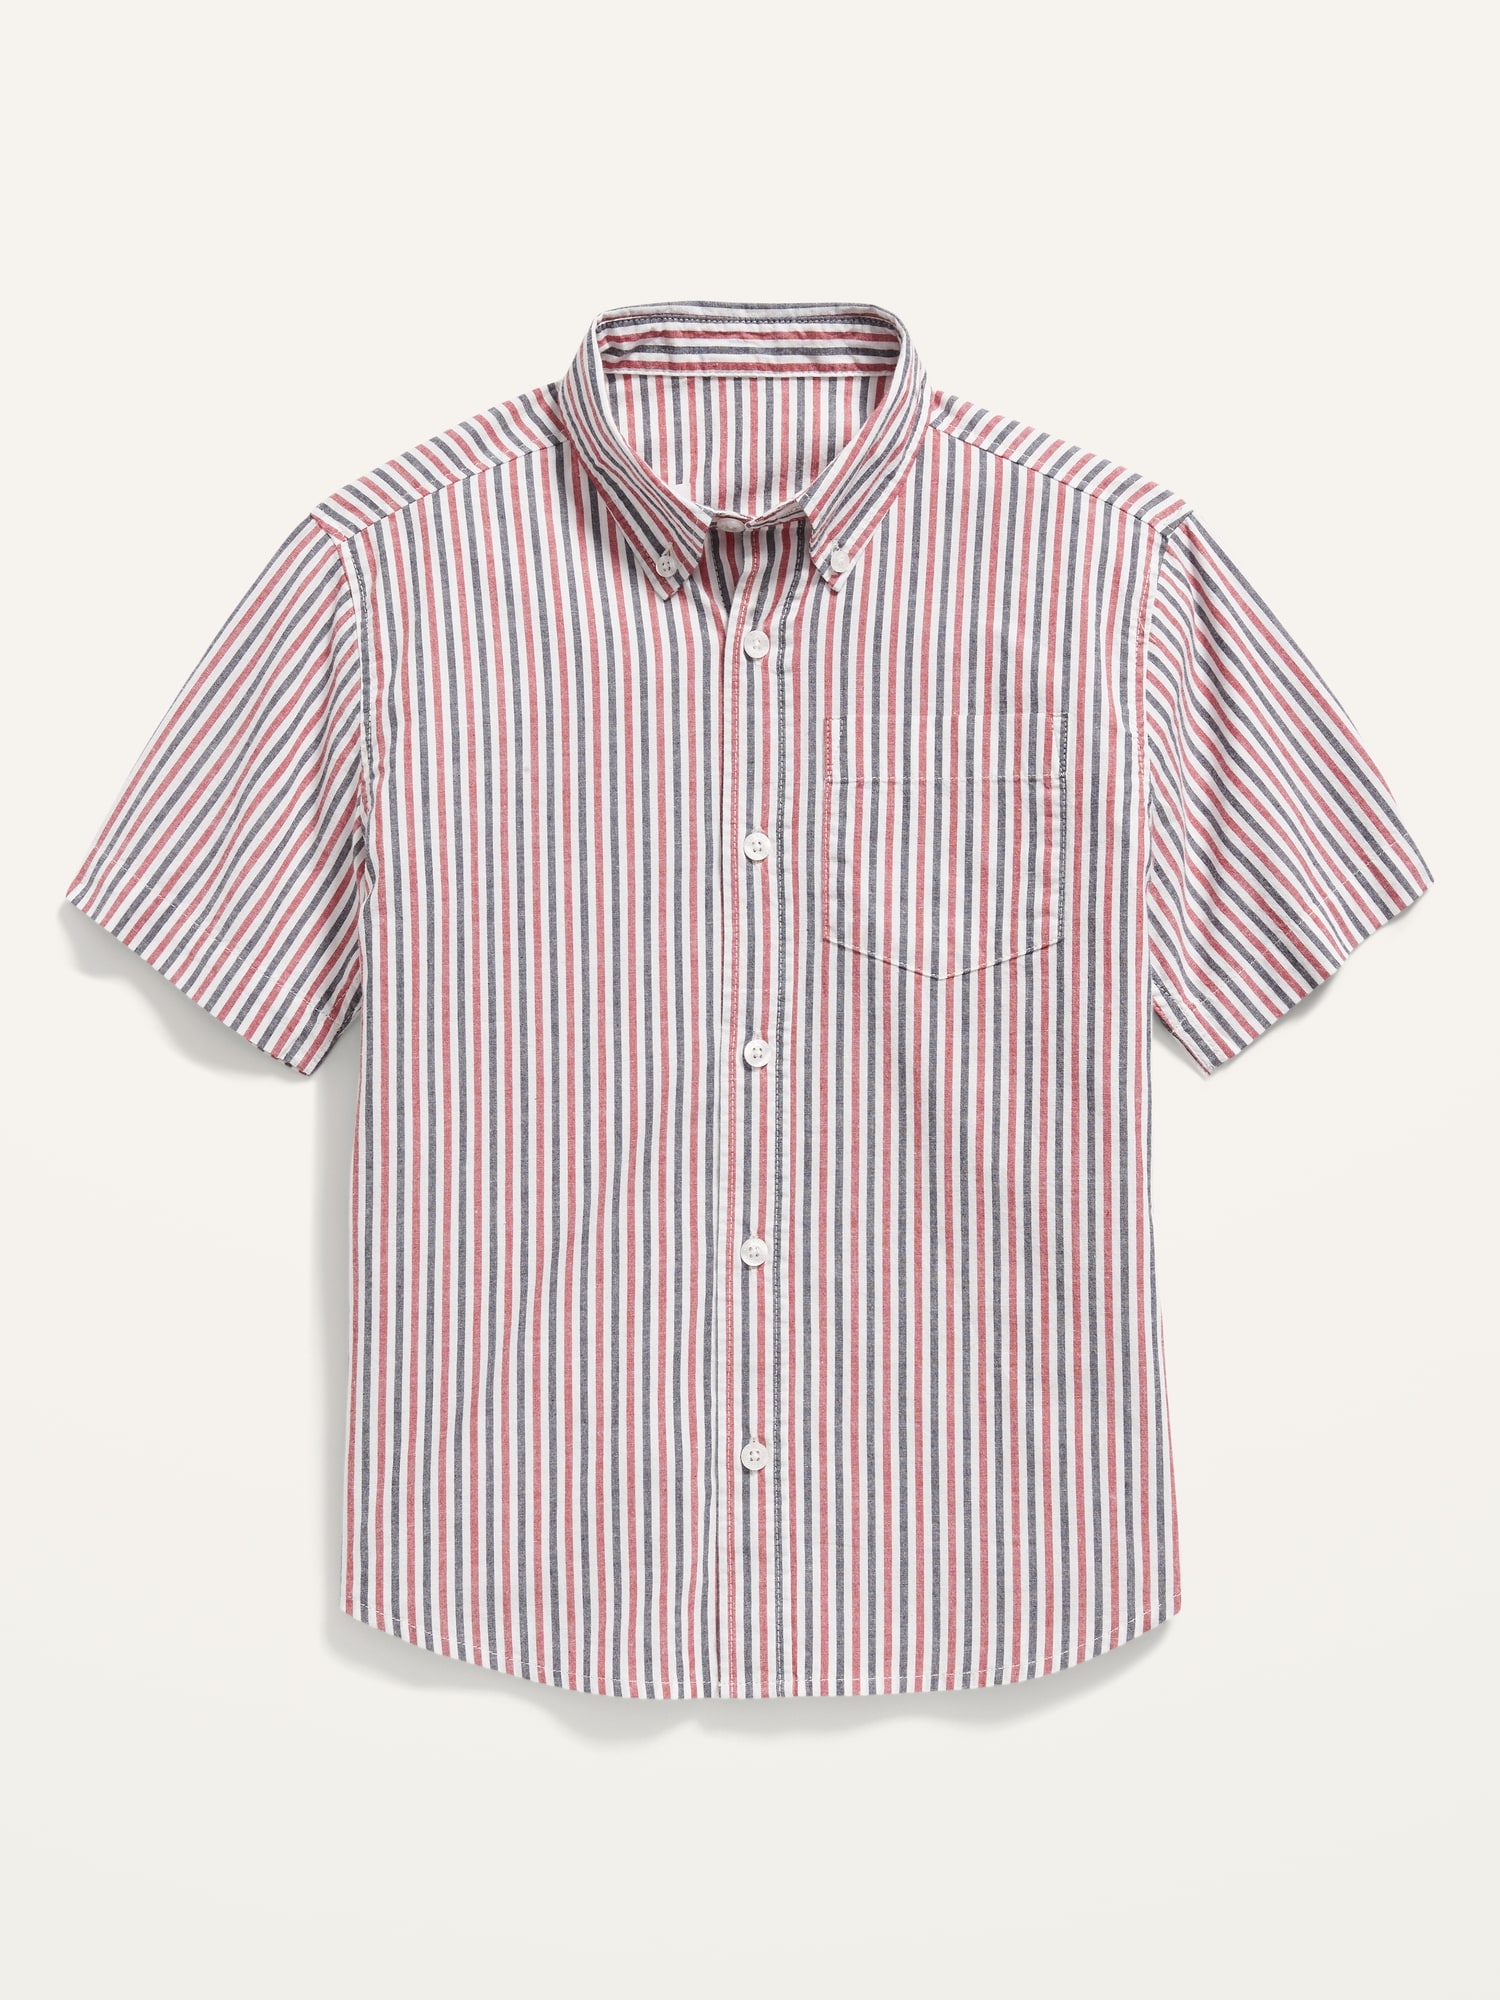 Printed Built-In Flex Short-Sleeve Shirt for Boys | Old Navy